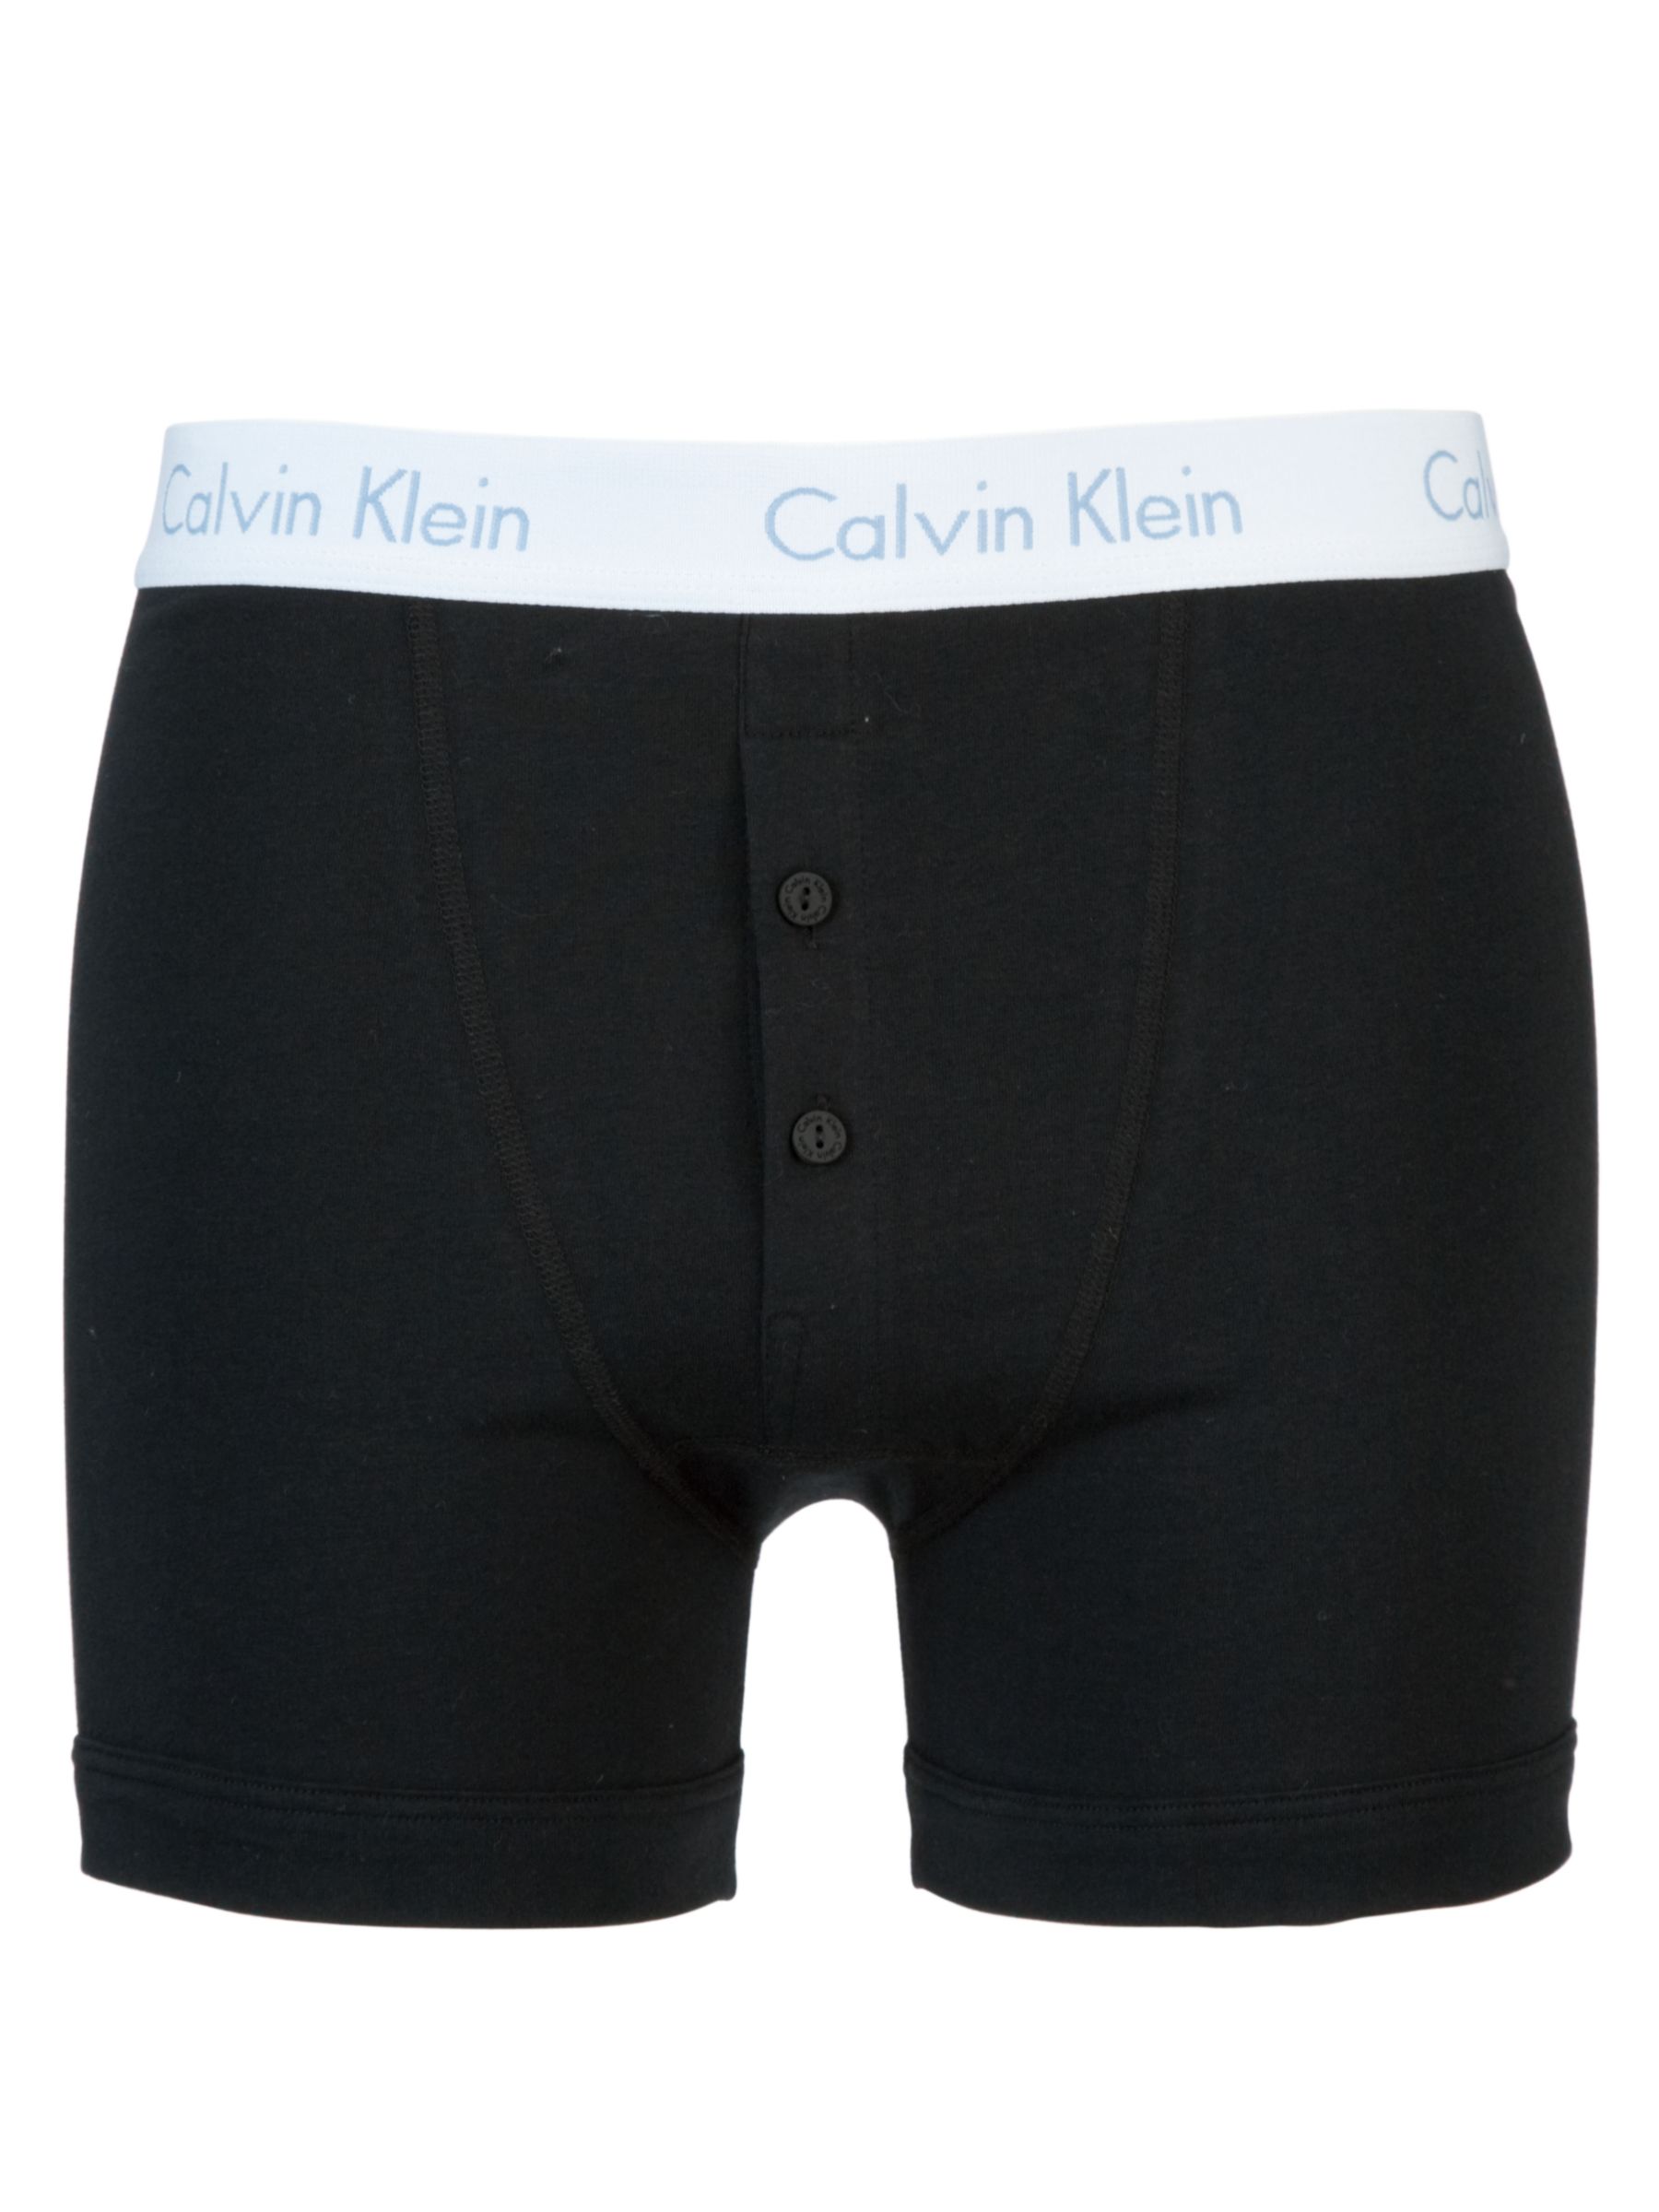 Calvin Klein Flexible Fit Cotton Trunks, Black, Medium